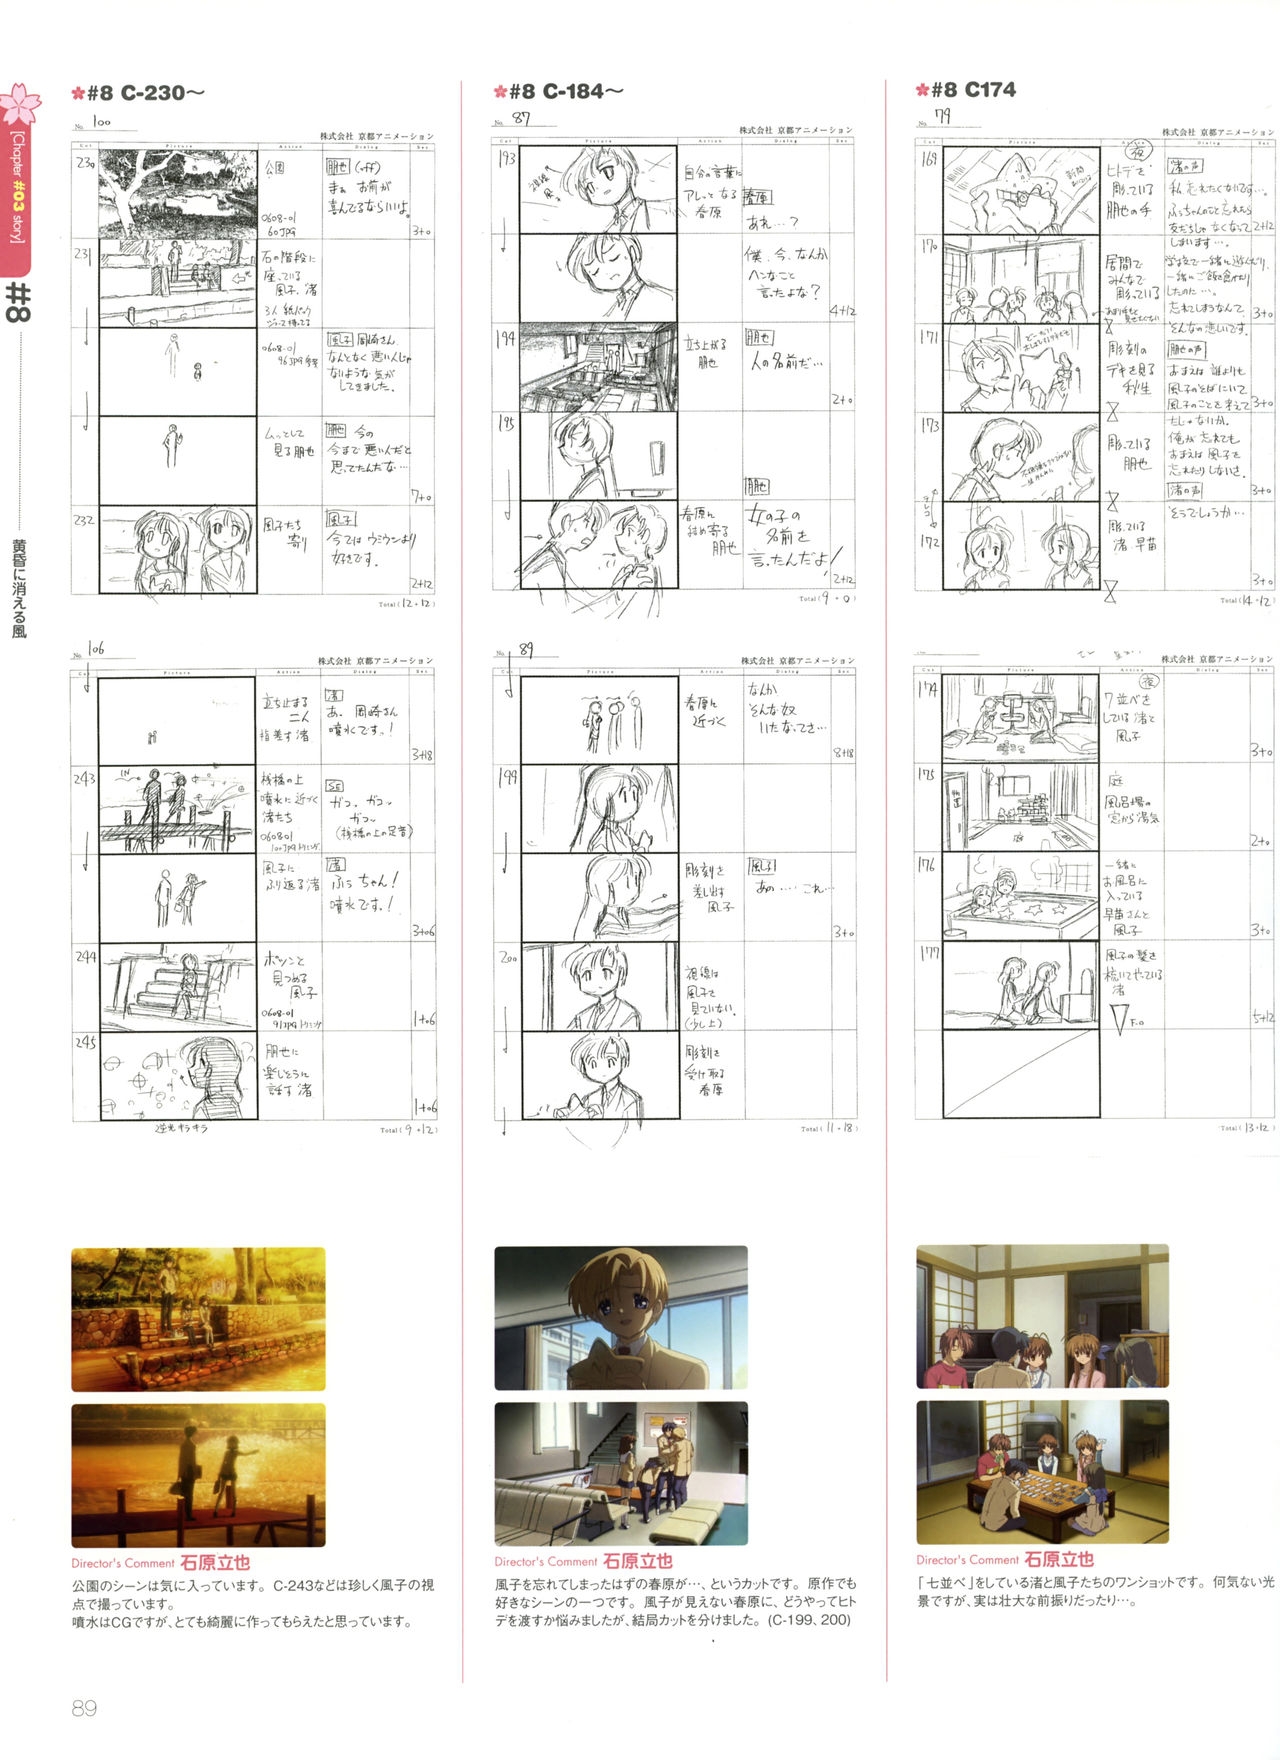 Clannad TV Animation Visual Fan Book 92